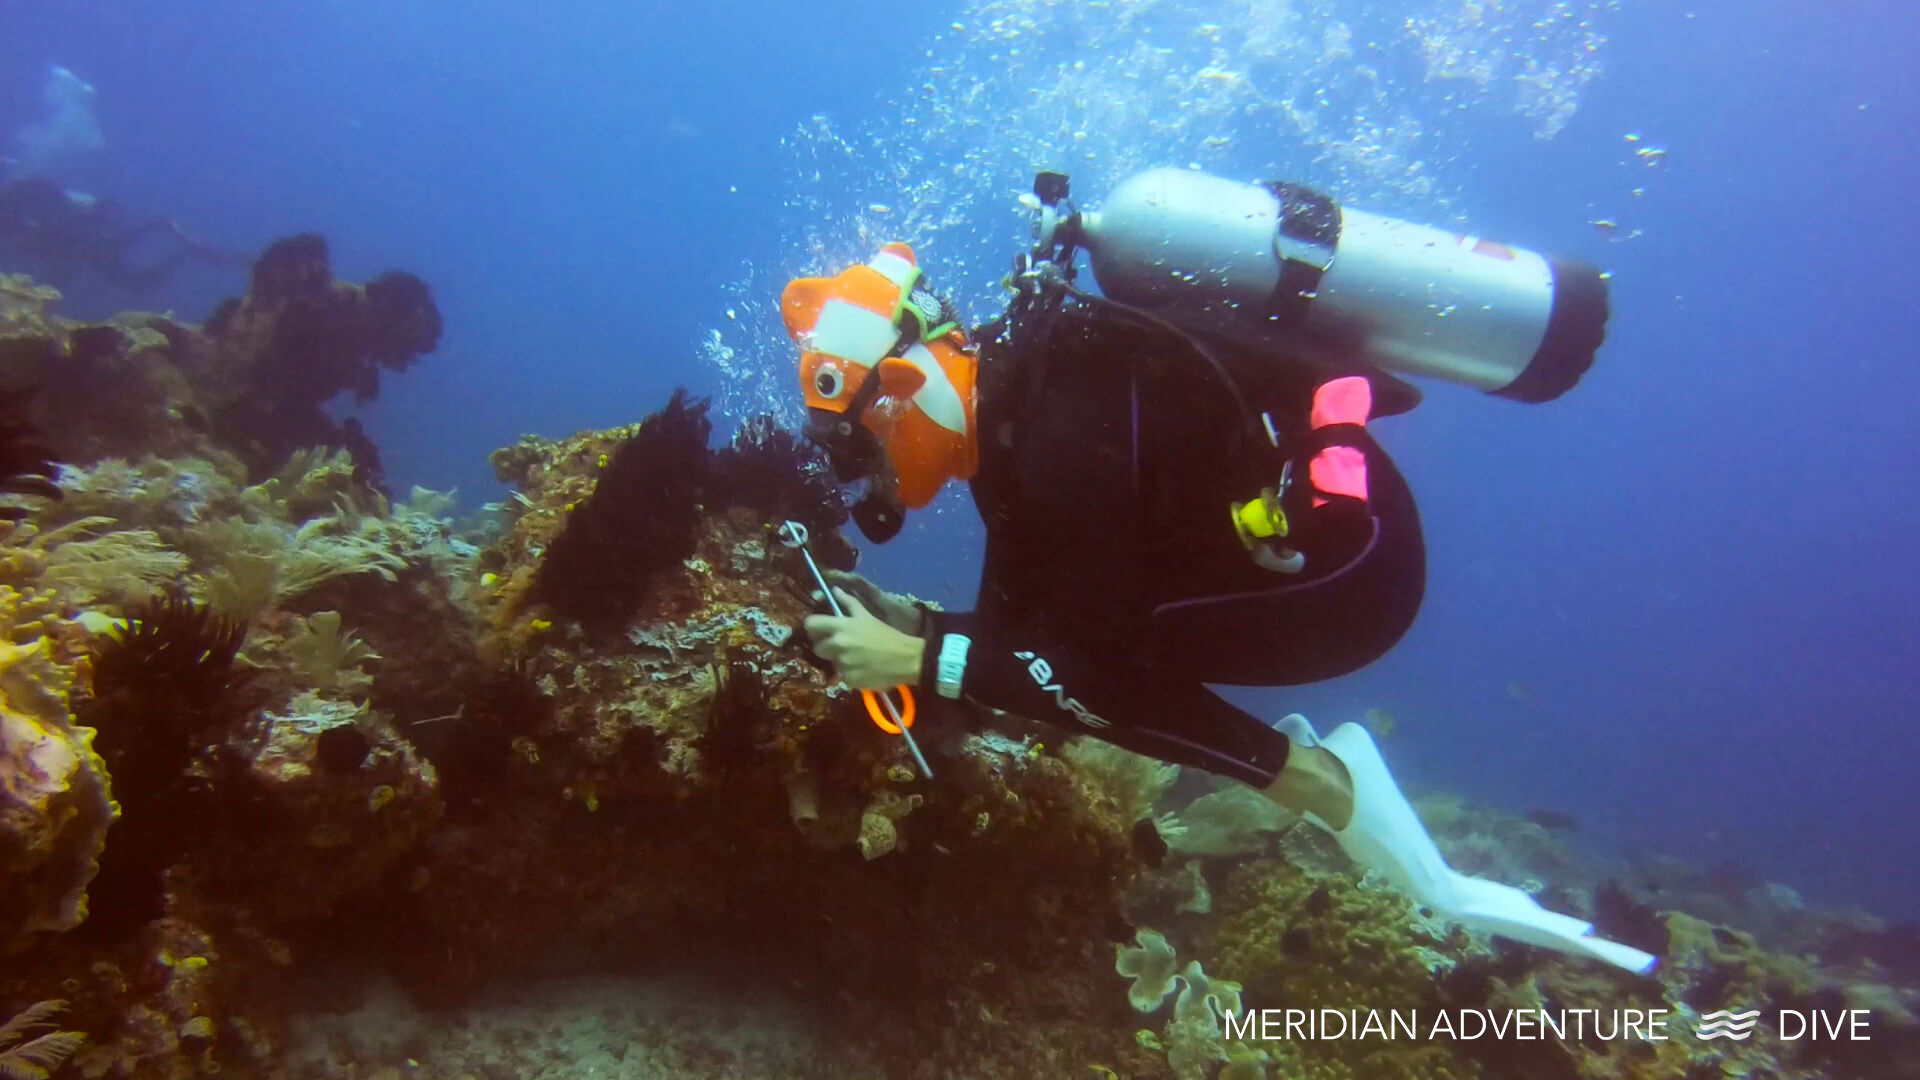 Raja Ampat diving - Doing The Worm.